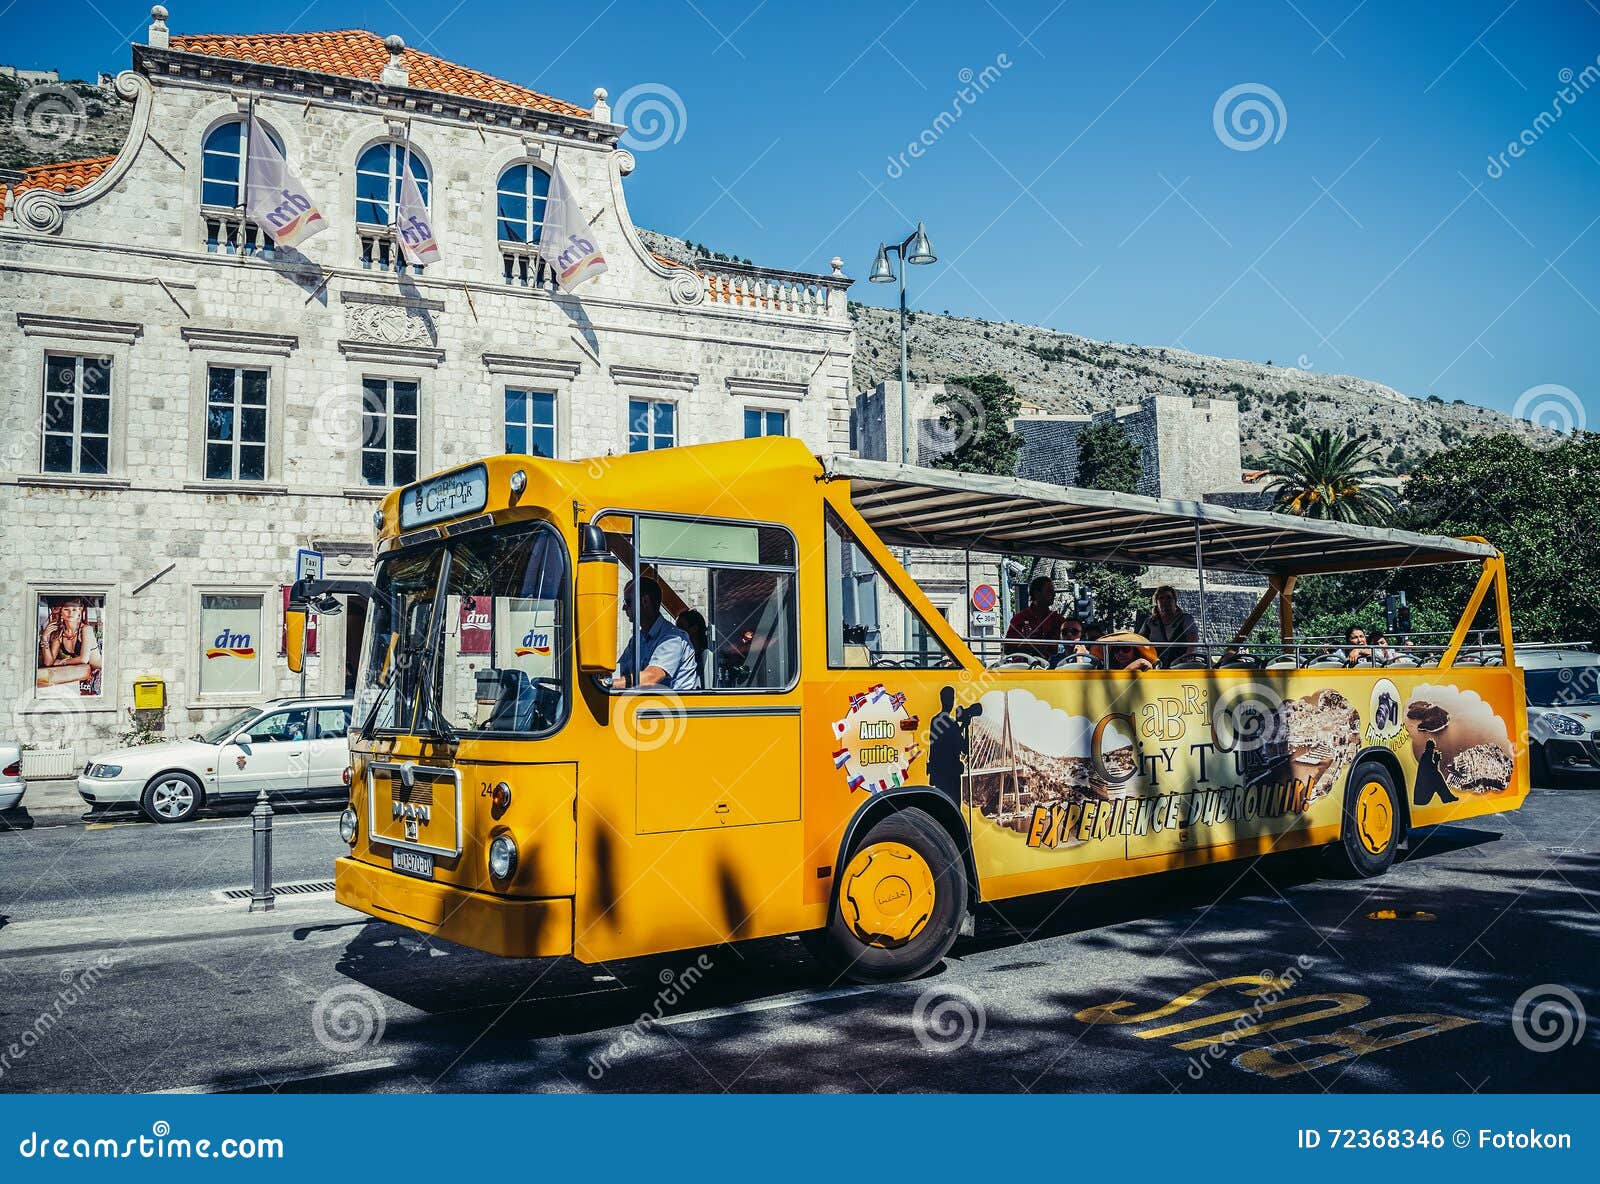 dubrovnik tourist bus